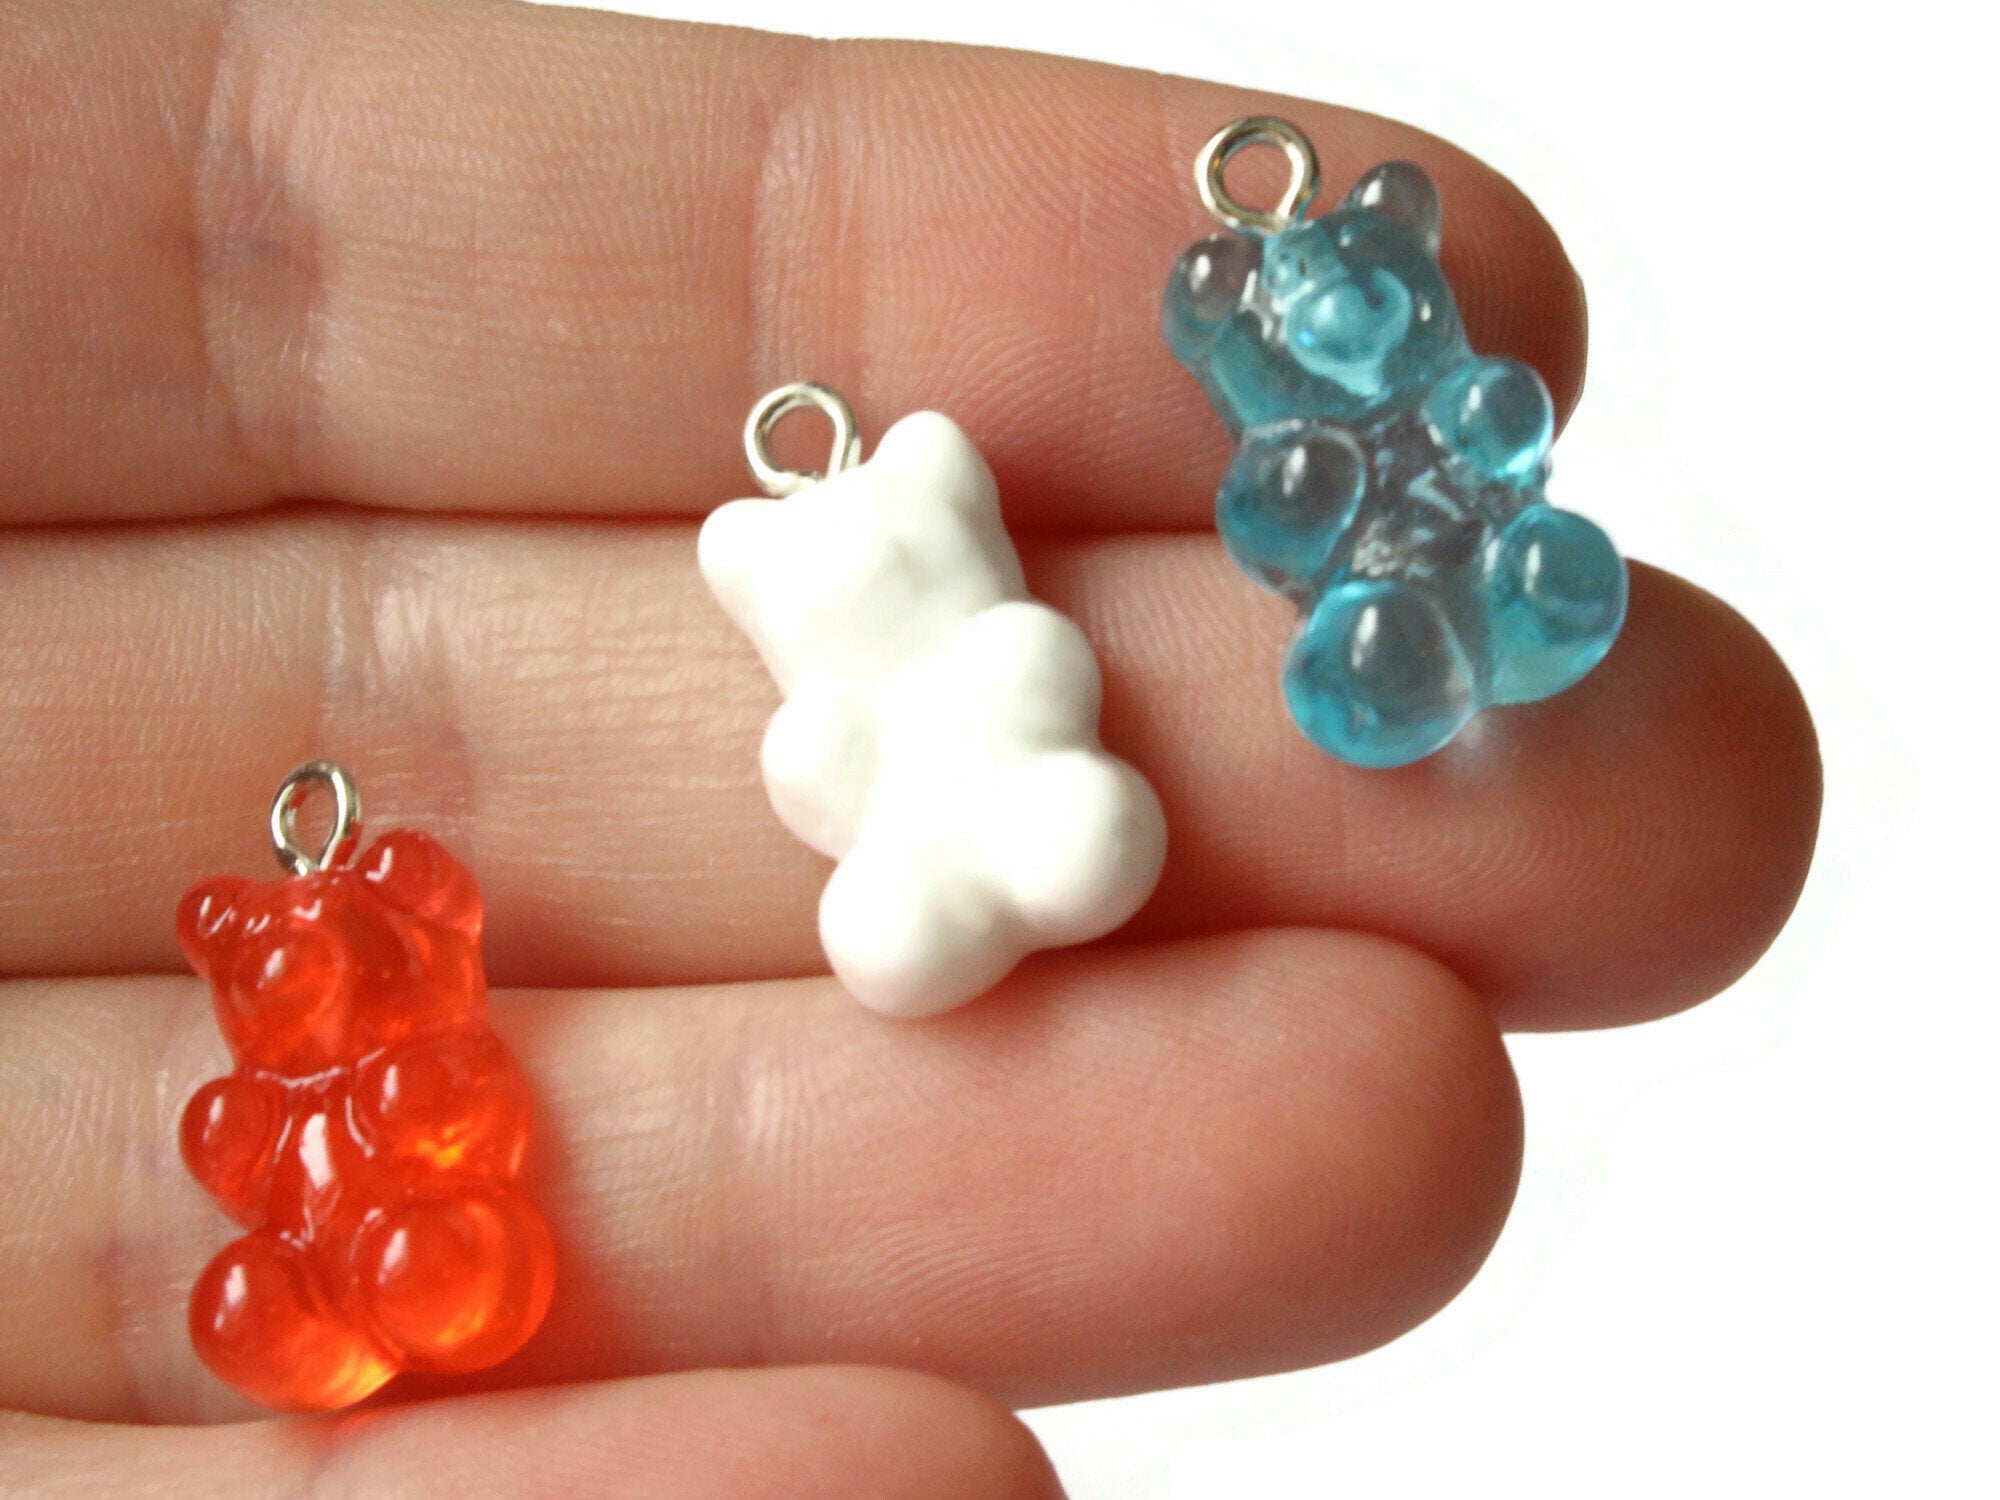 10pcs/set Resin Transparent Cute Gummy Bear Shaped Diy Beads Mixed